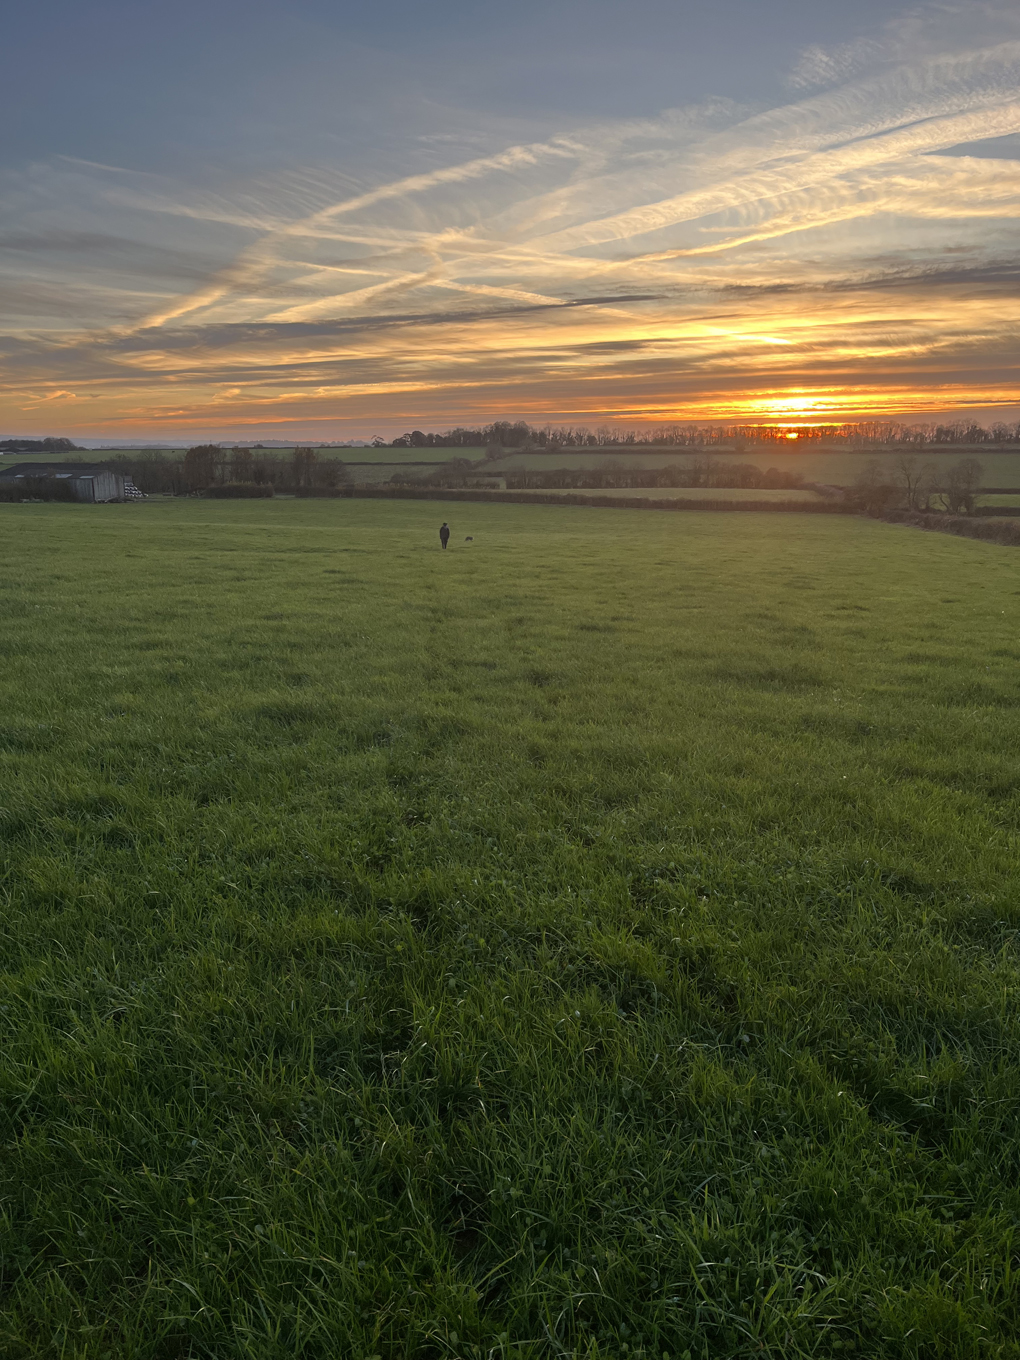 Walking through a field at sunset